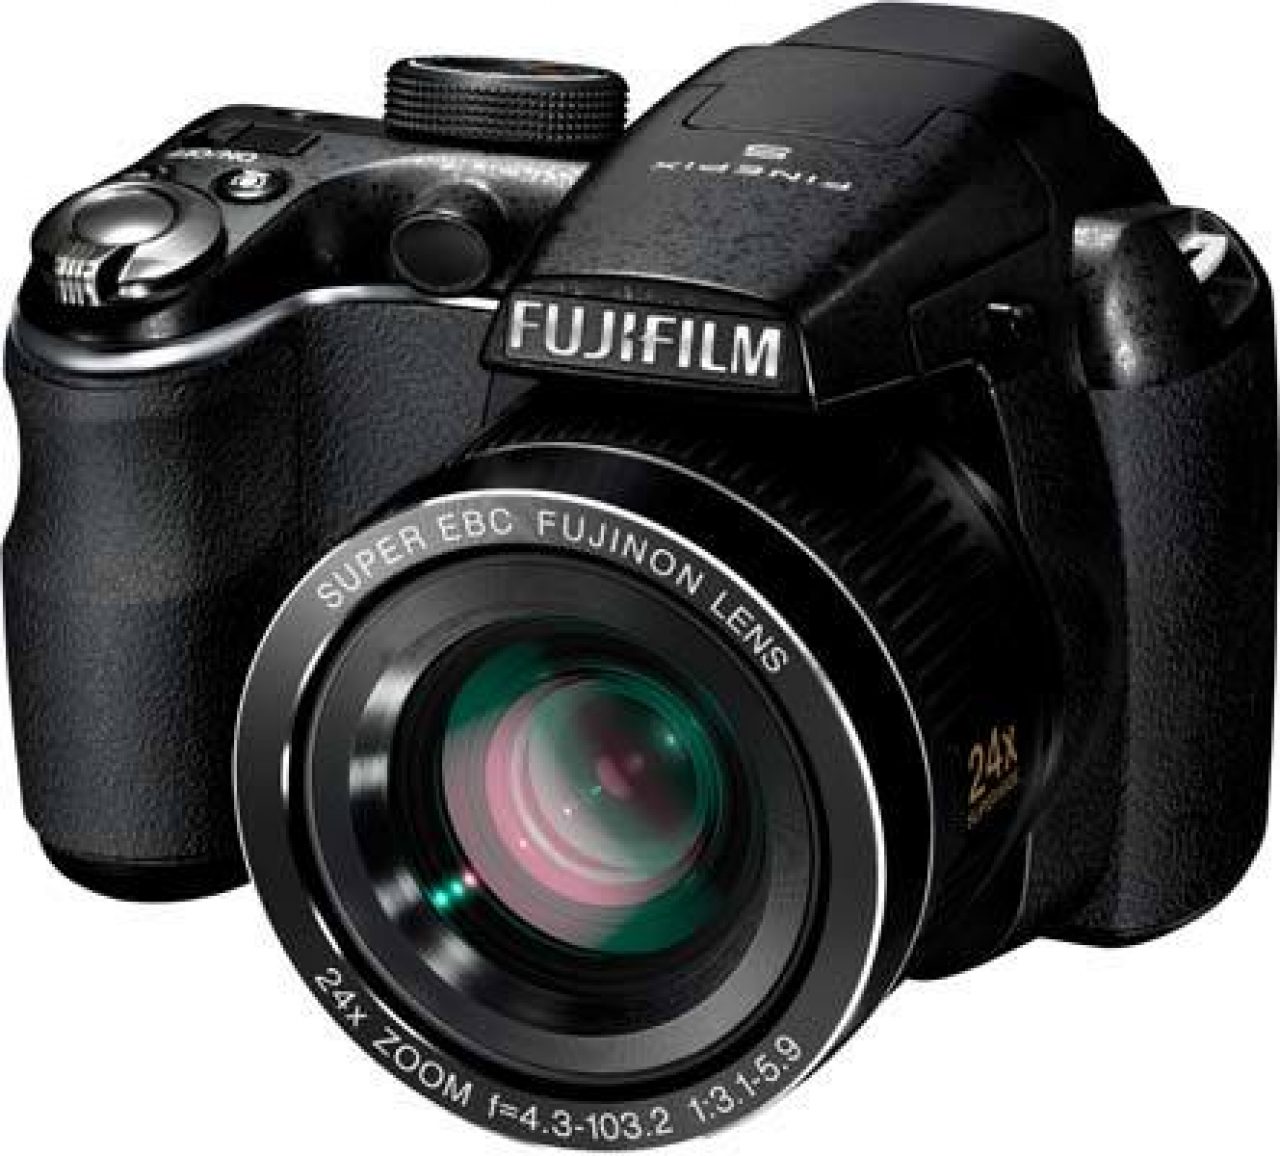 Fujifilm FinePix S3200 Review | Photography Blog